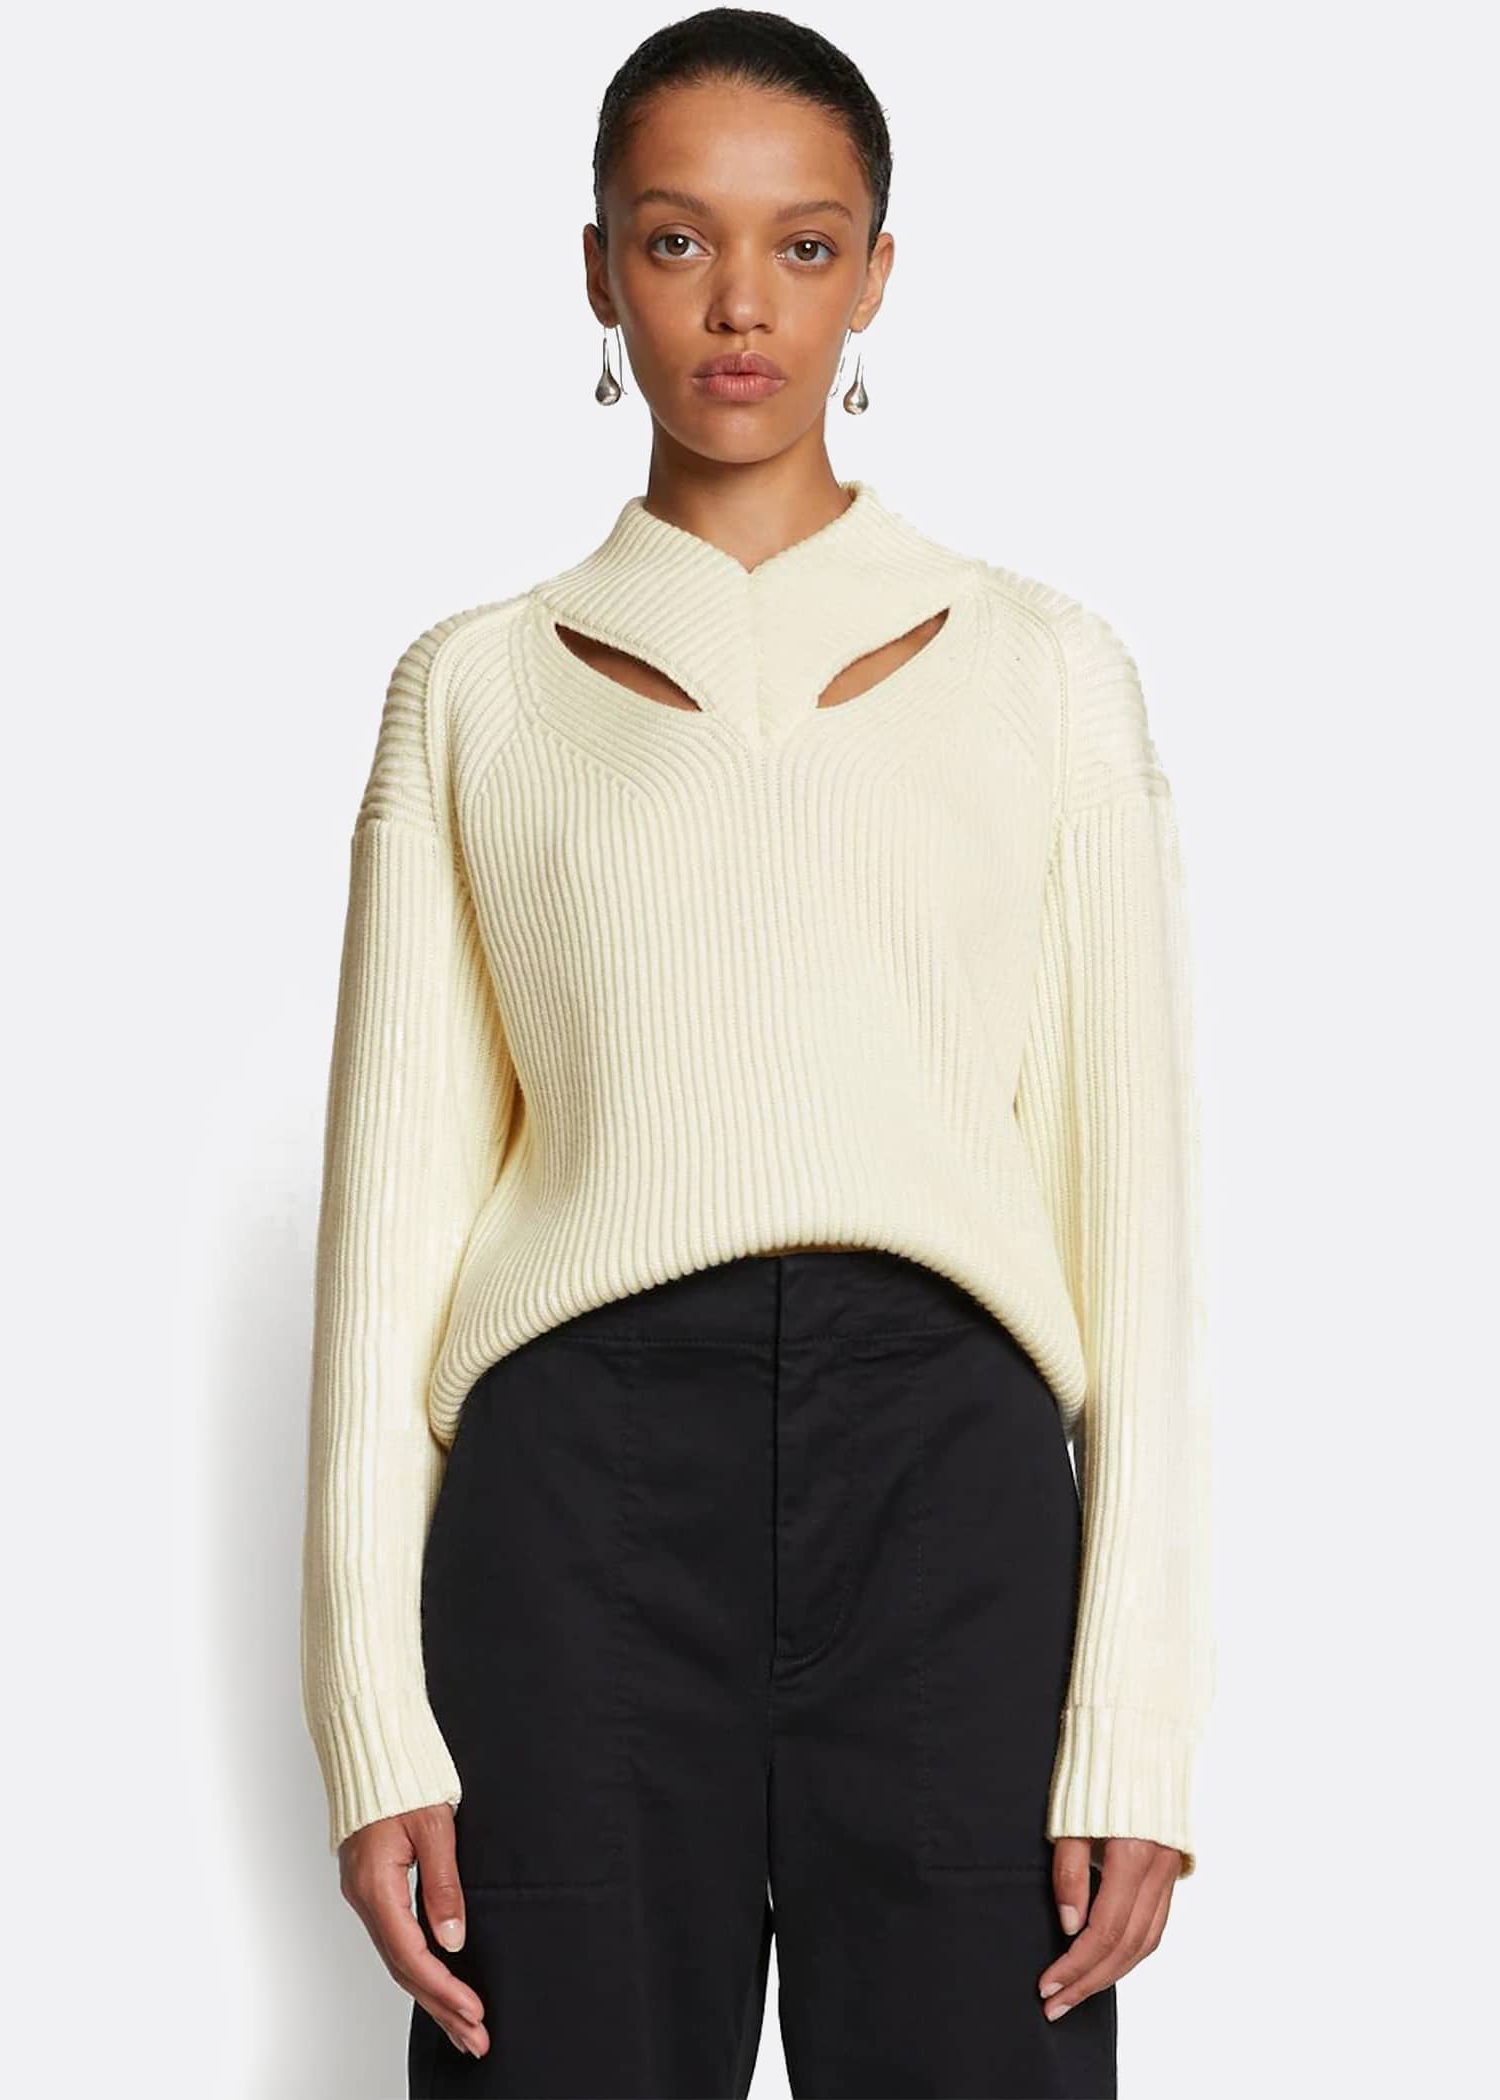 Proenza Schouler White Label Cashmere Merino 'Cut-Out' Sweater